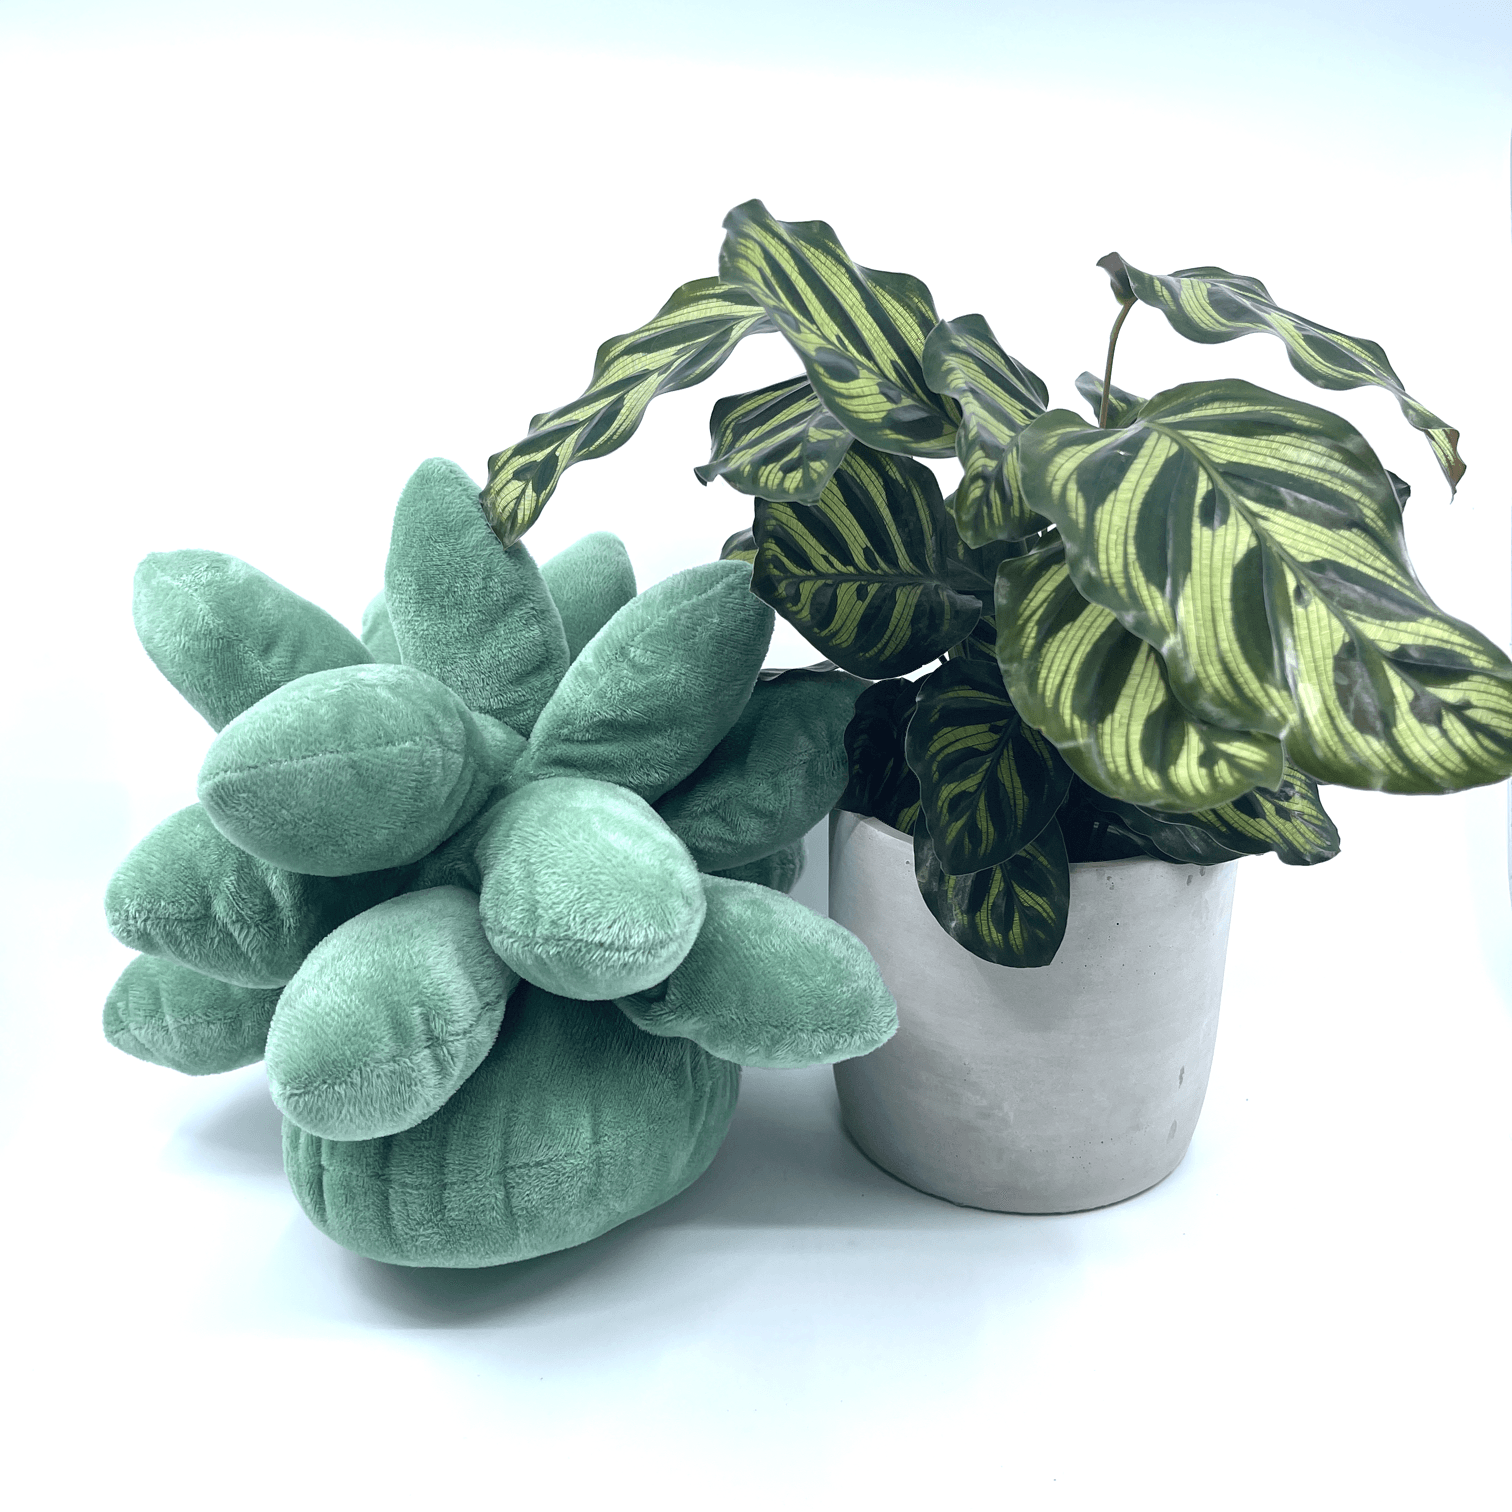 Plant + Green Plushie Gift - The Plant Buddies